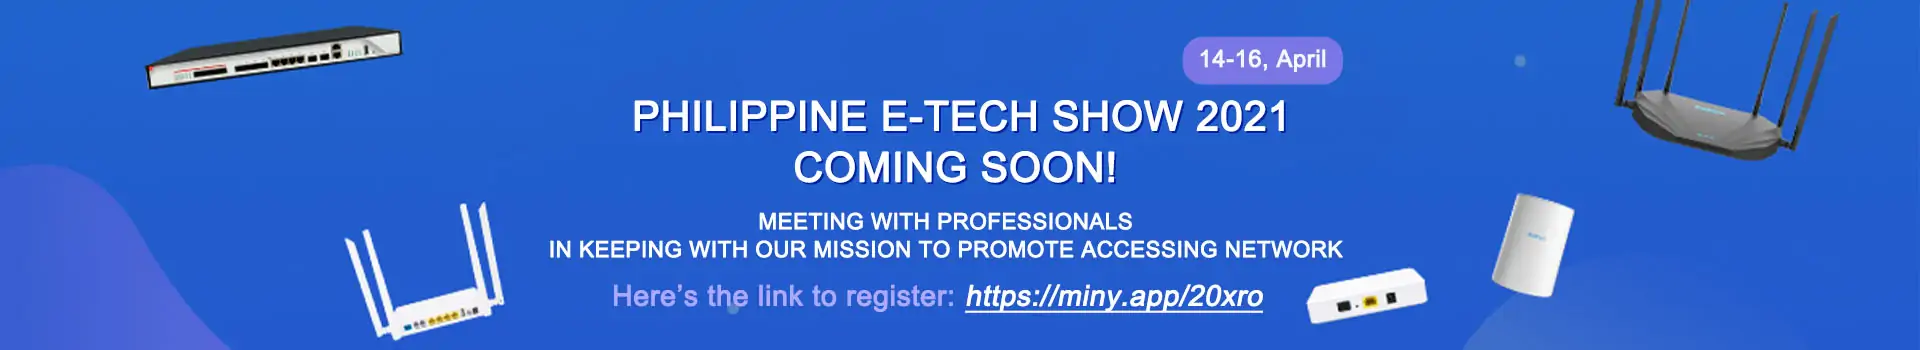 philippine e tech show 2021 coming soon